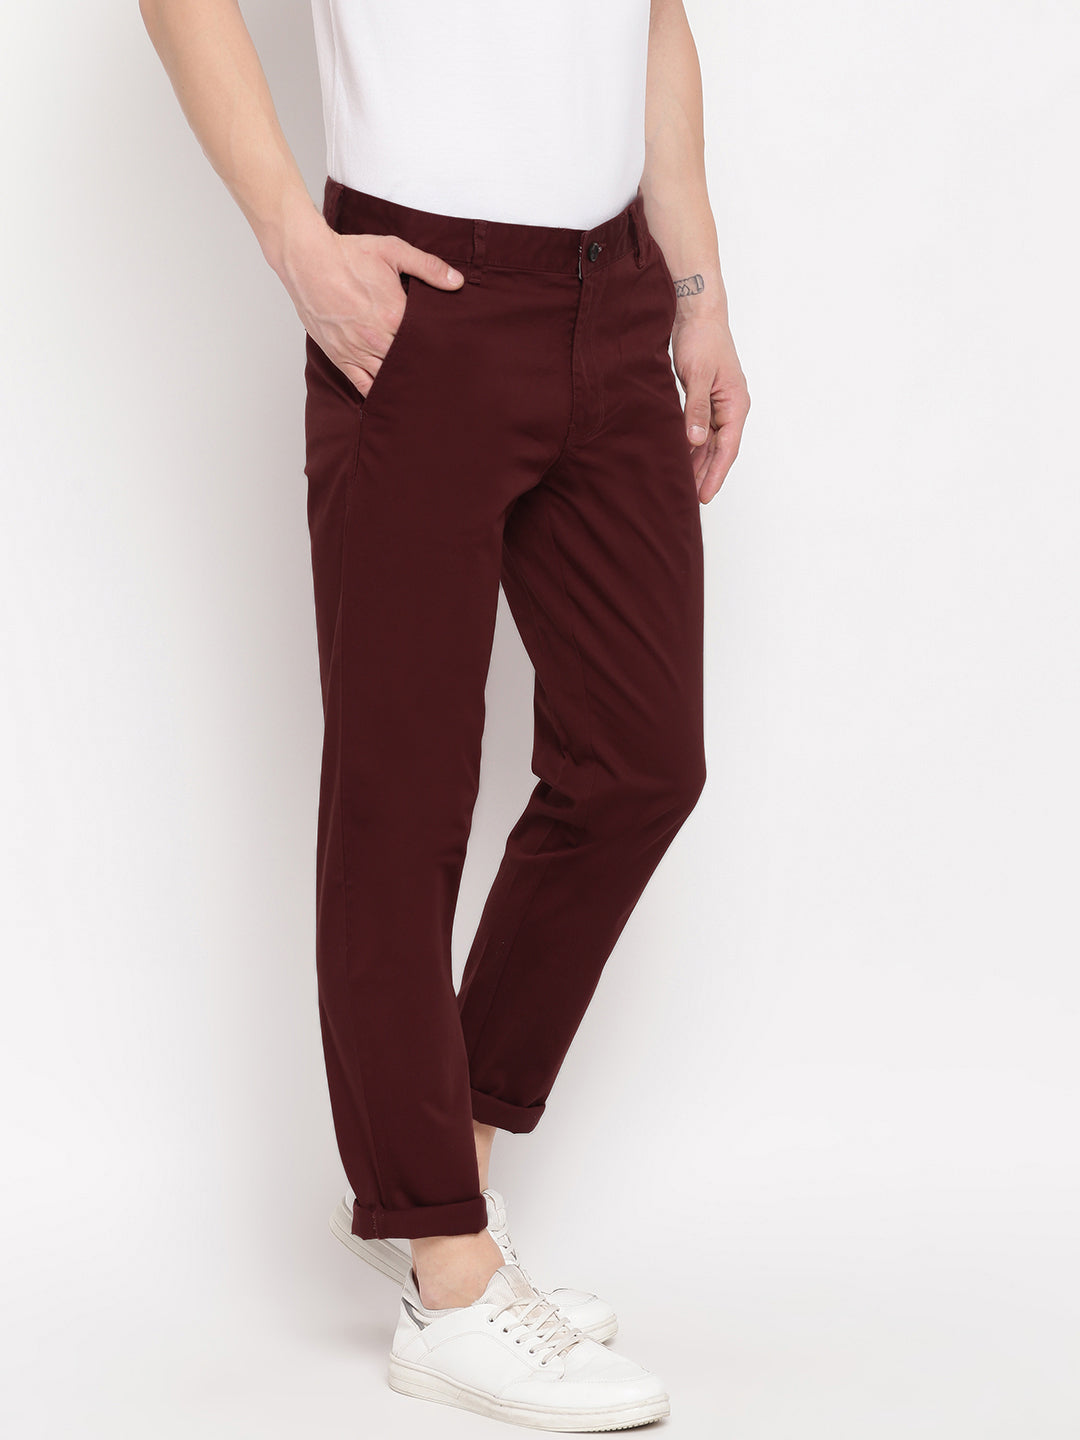 Men's suit slim-fit vest and burgundy trousers in beige squares - CU116